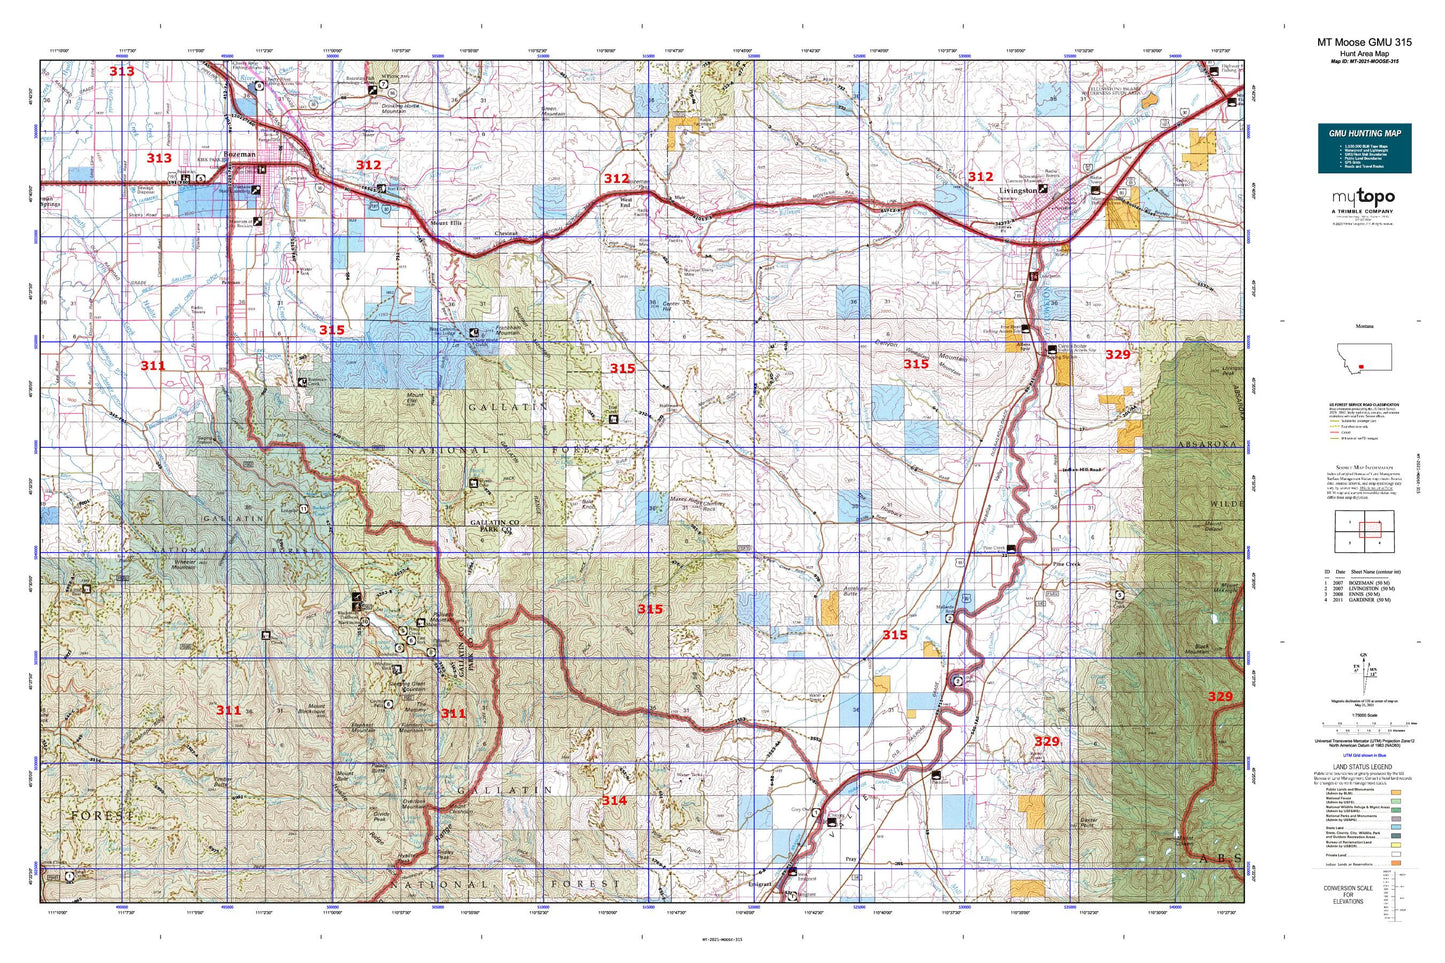 Montana Moose GMU 315 Map Image